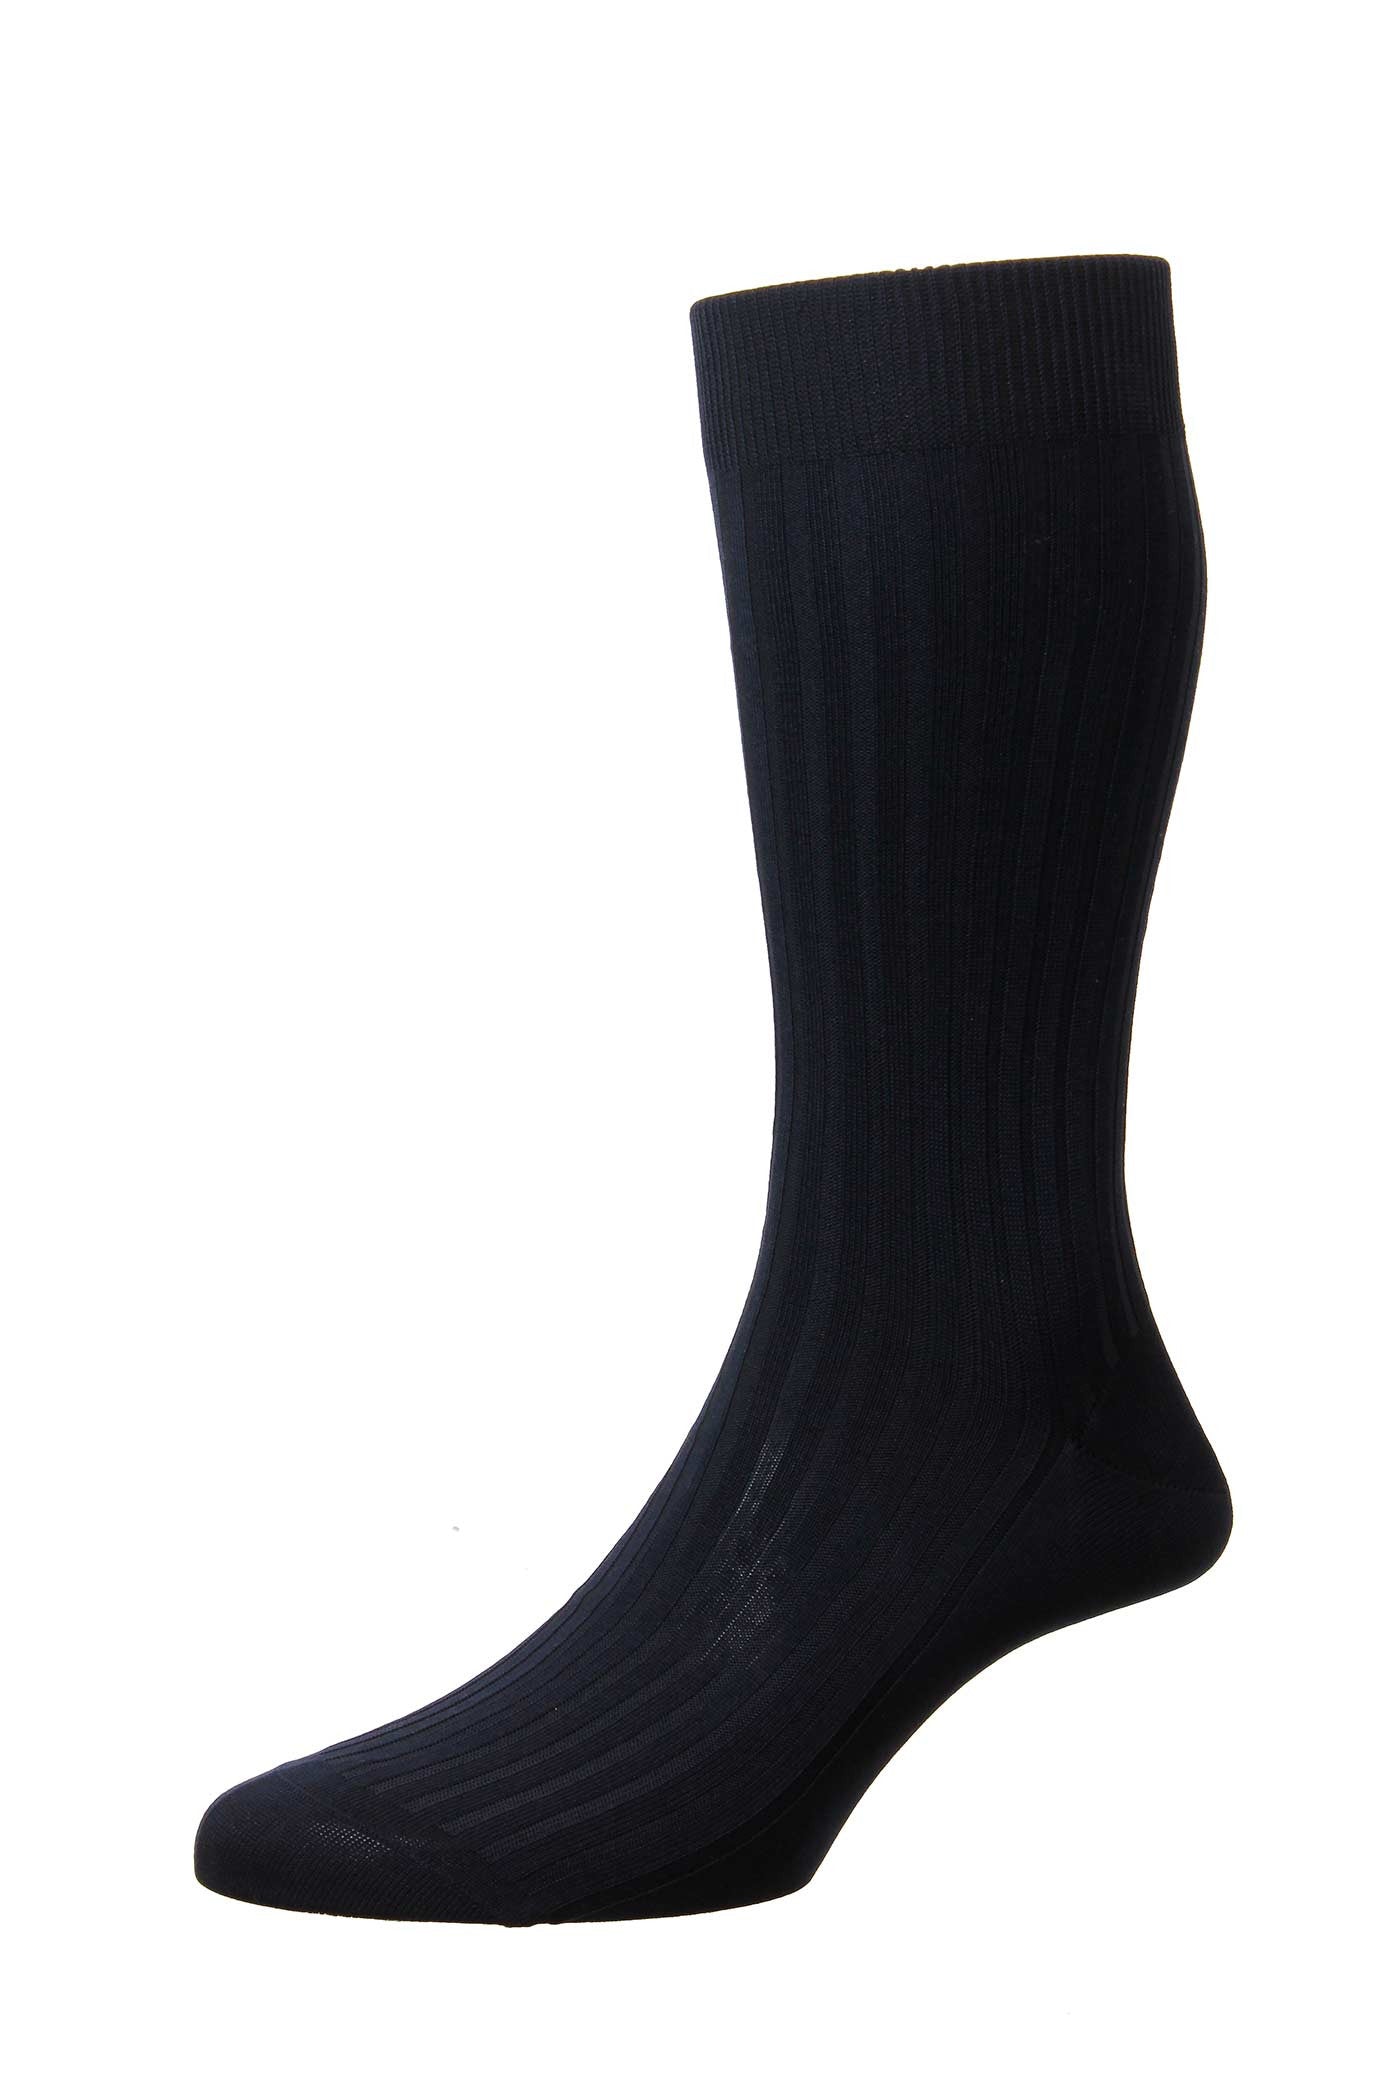 Men's Socks - Danvers (5614) 5x3 Rib Fil d'Ecosse / Cotton Lisle - NAVY